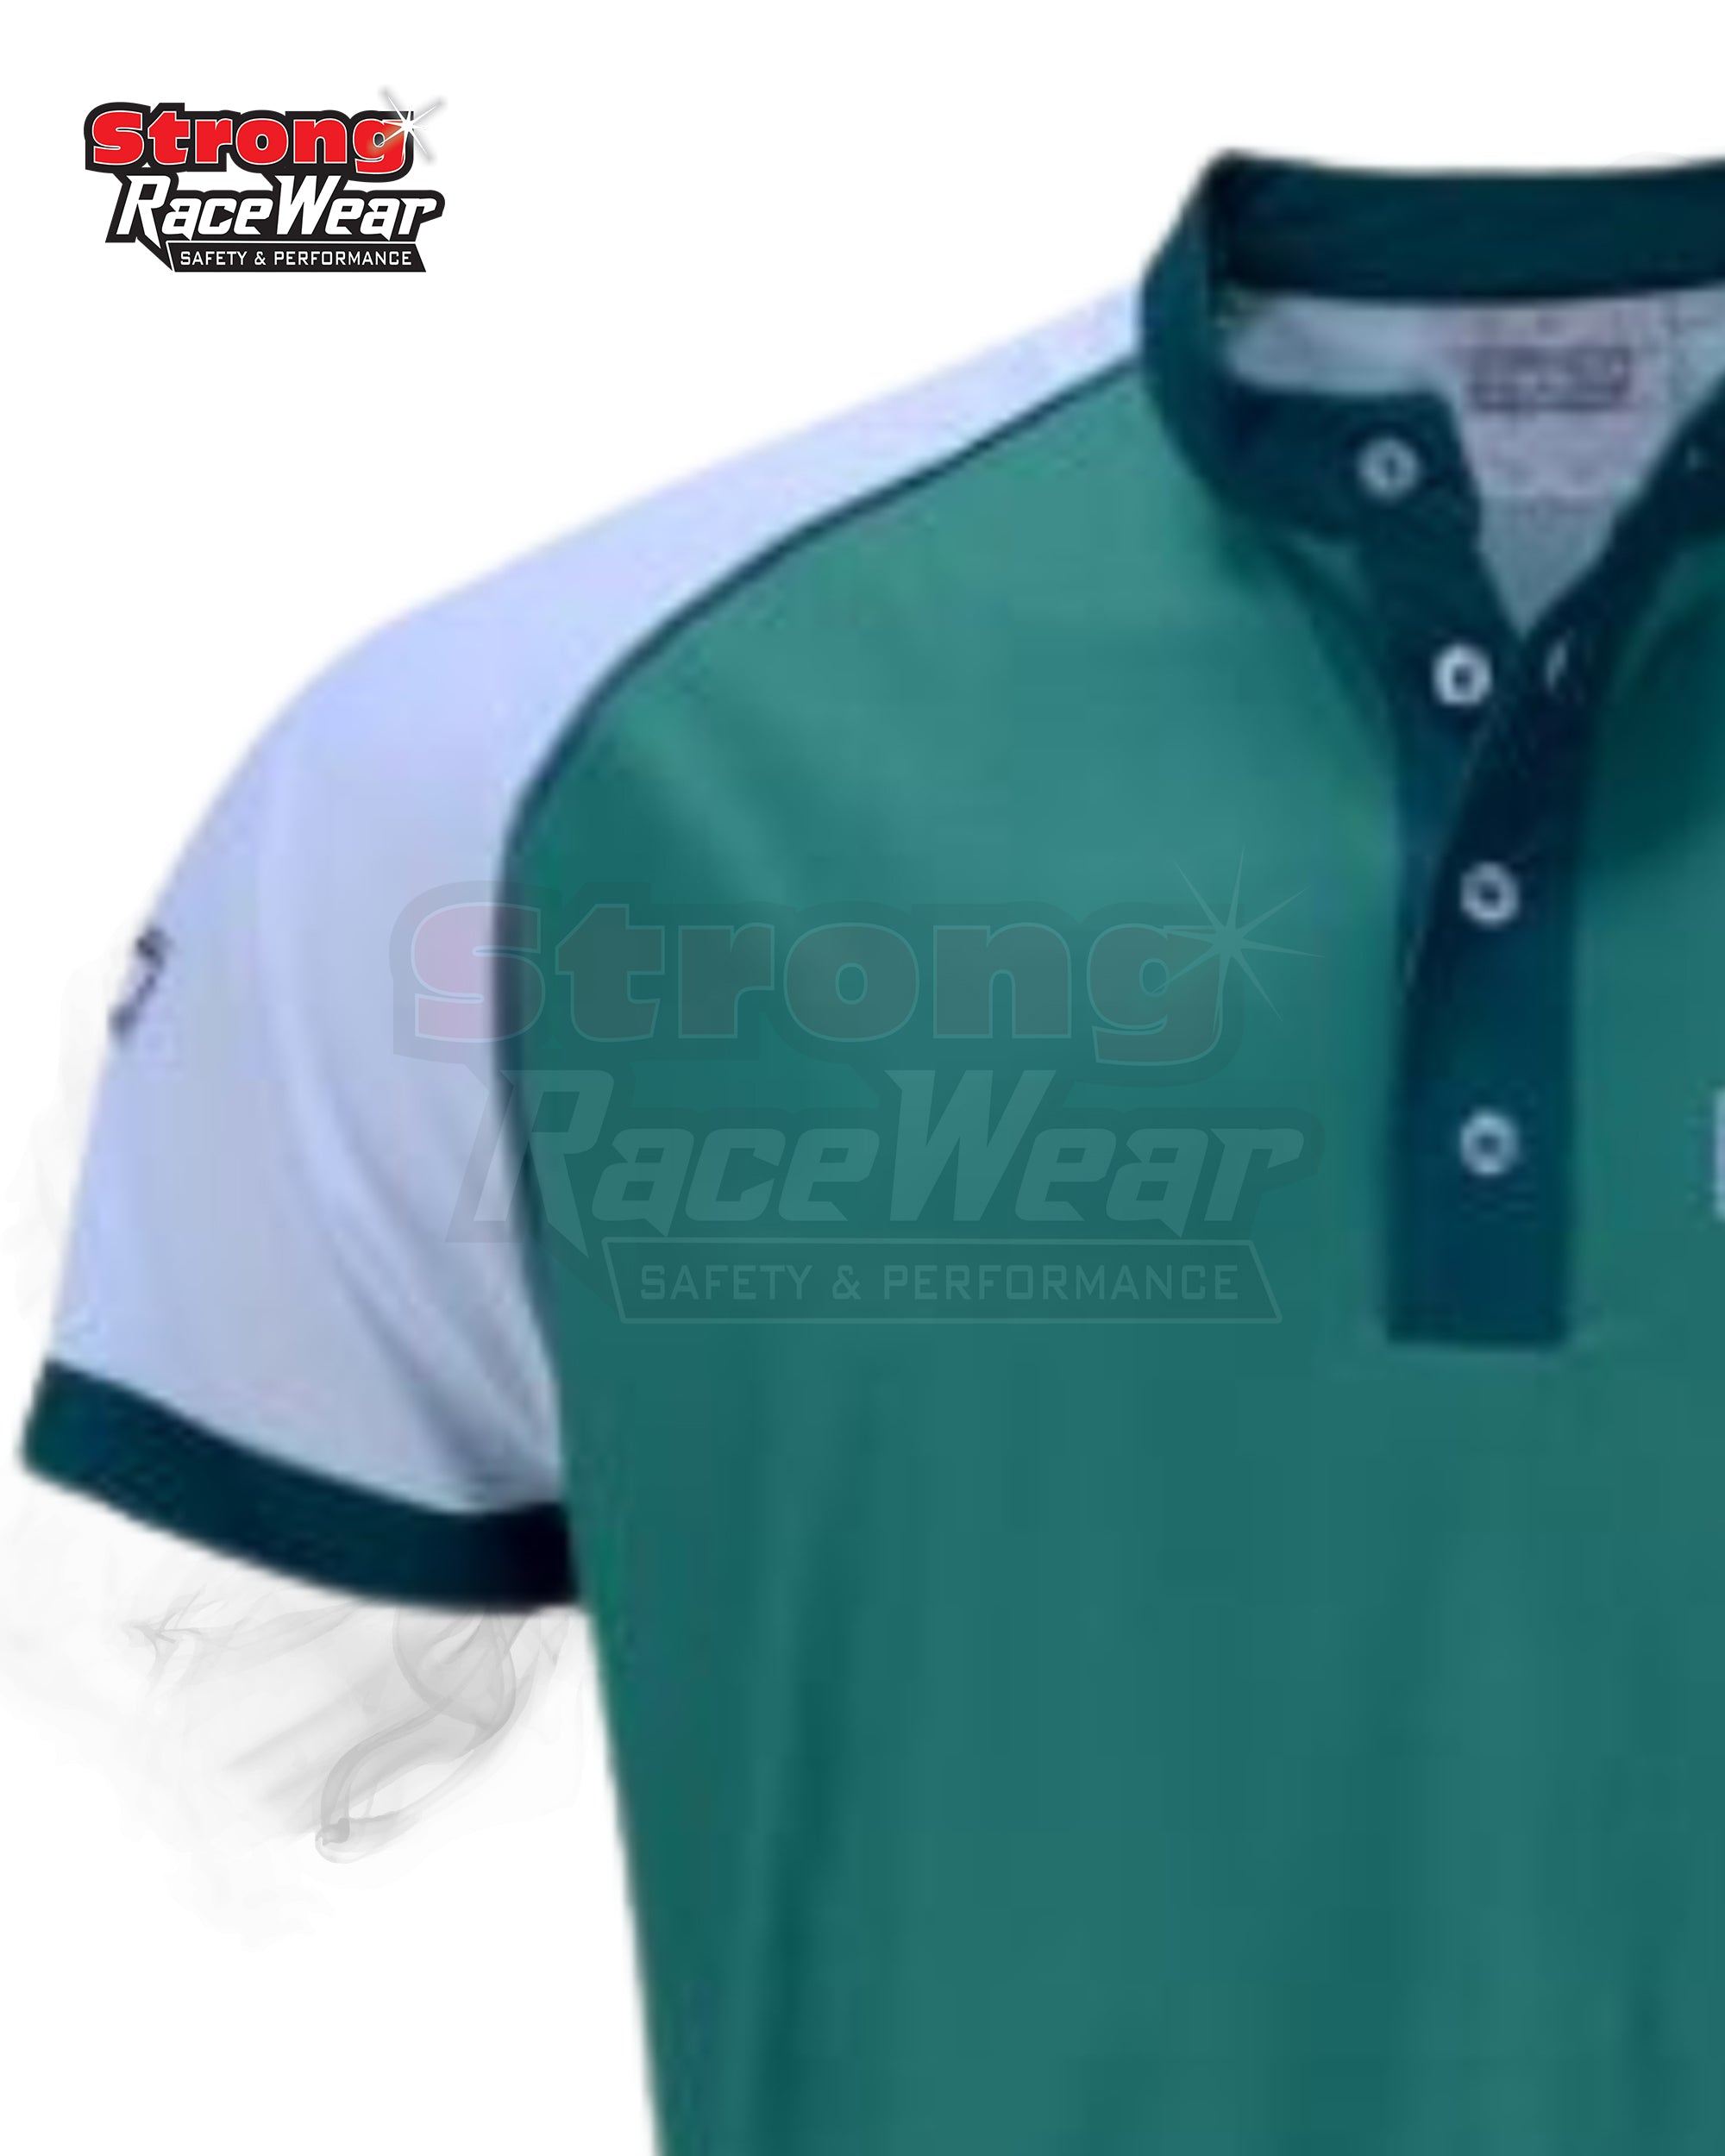 New Tonykart Polo Shirt 2022